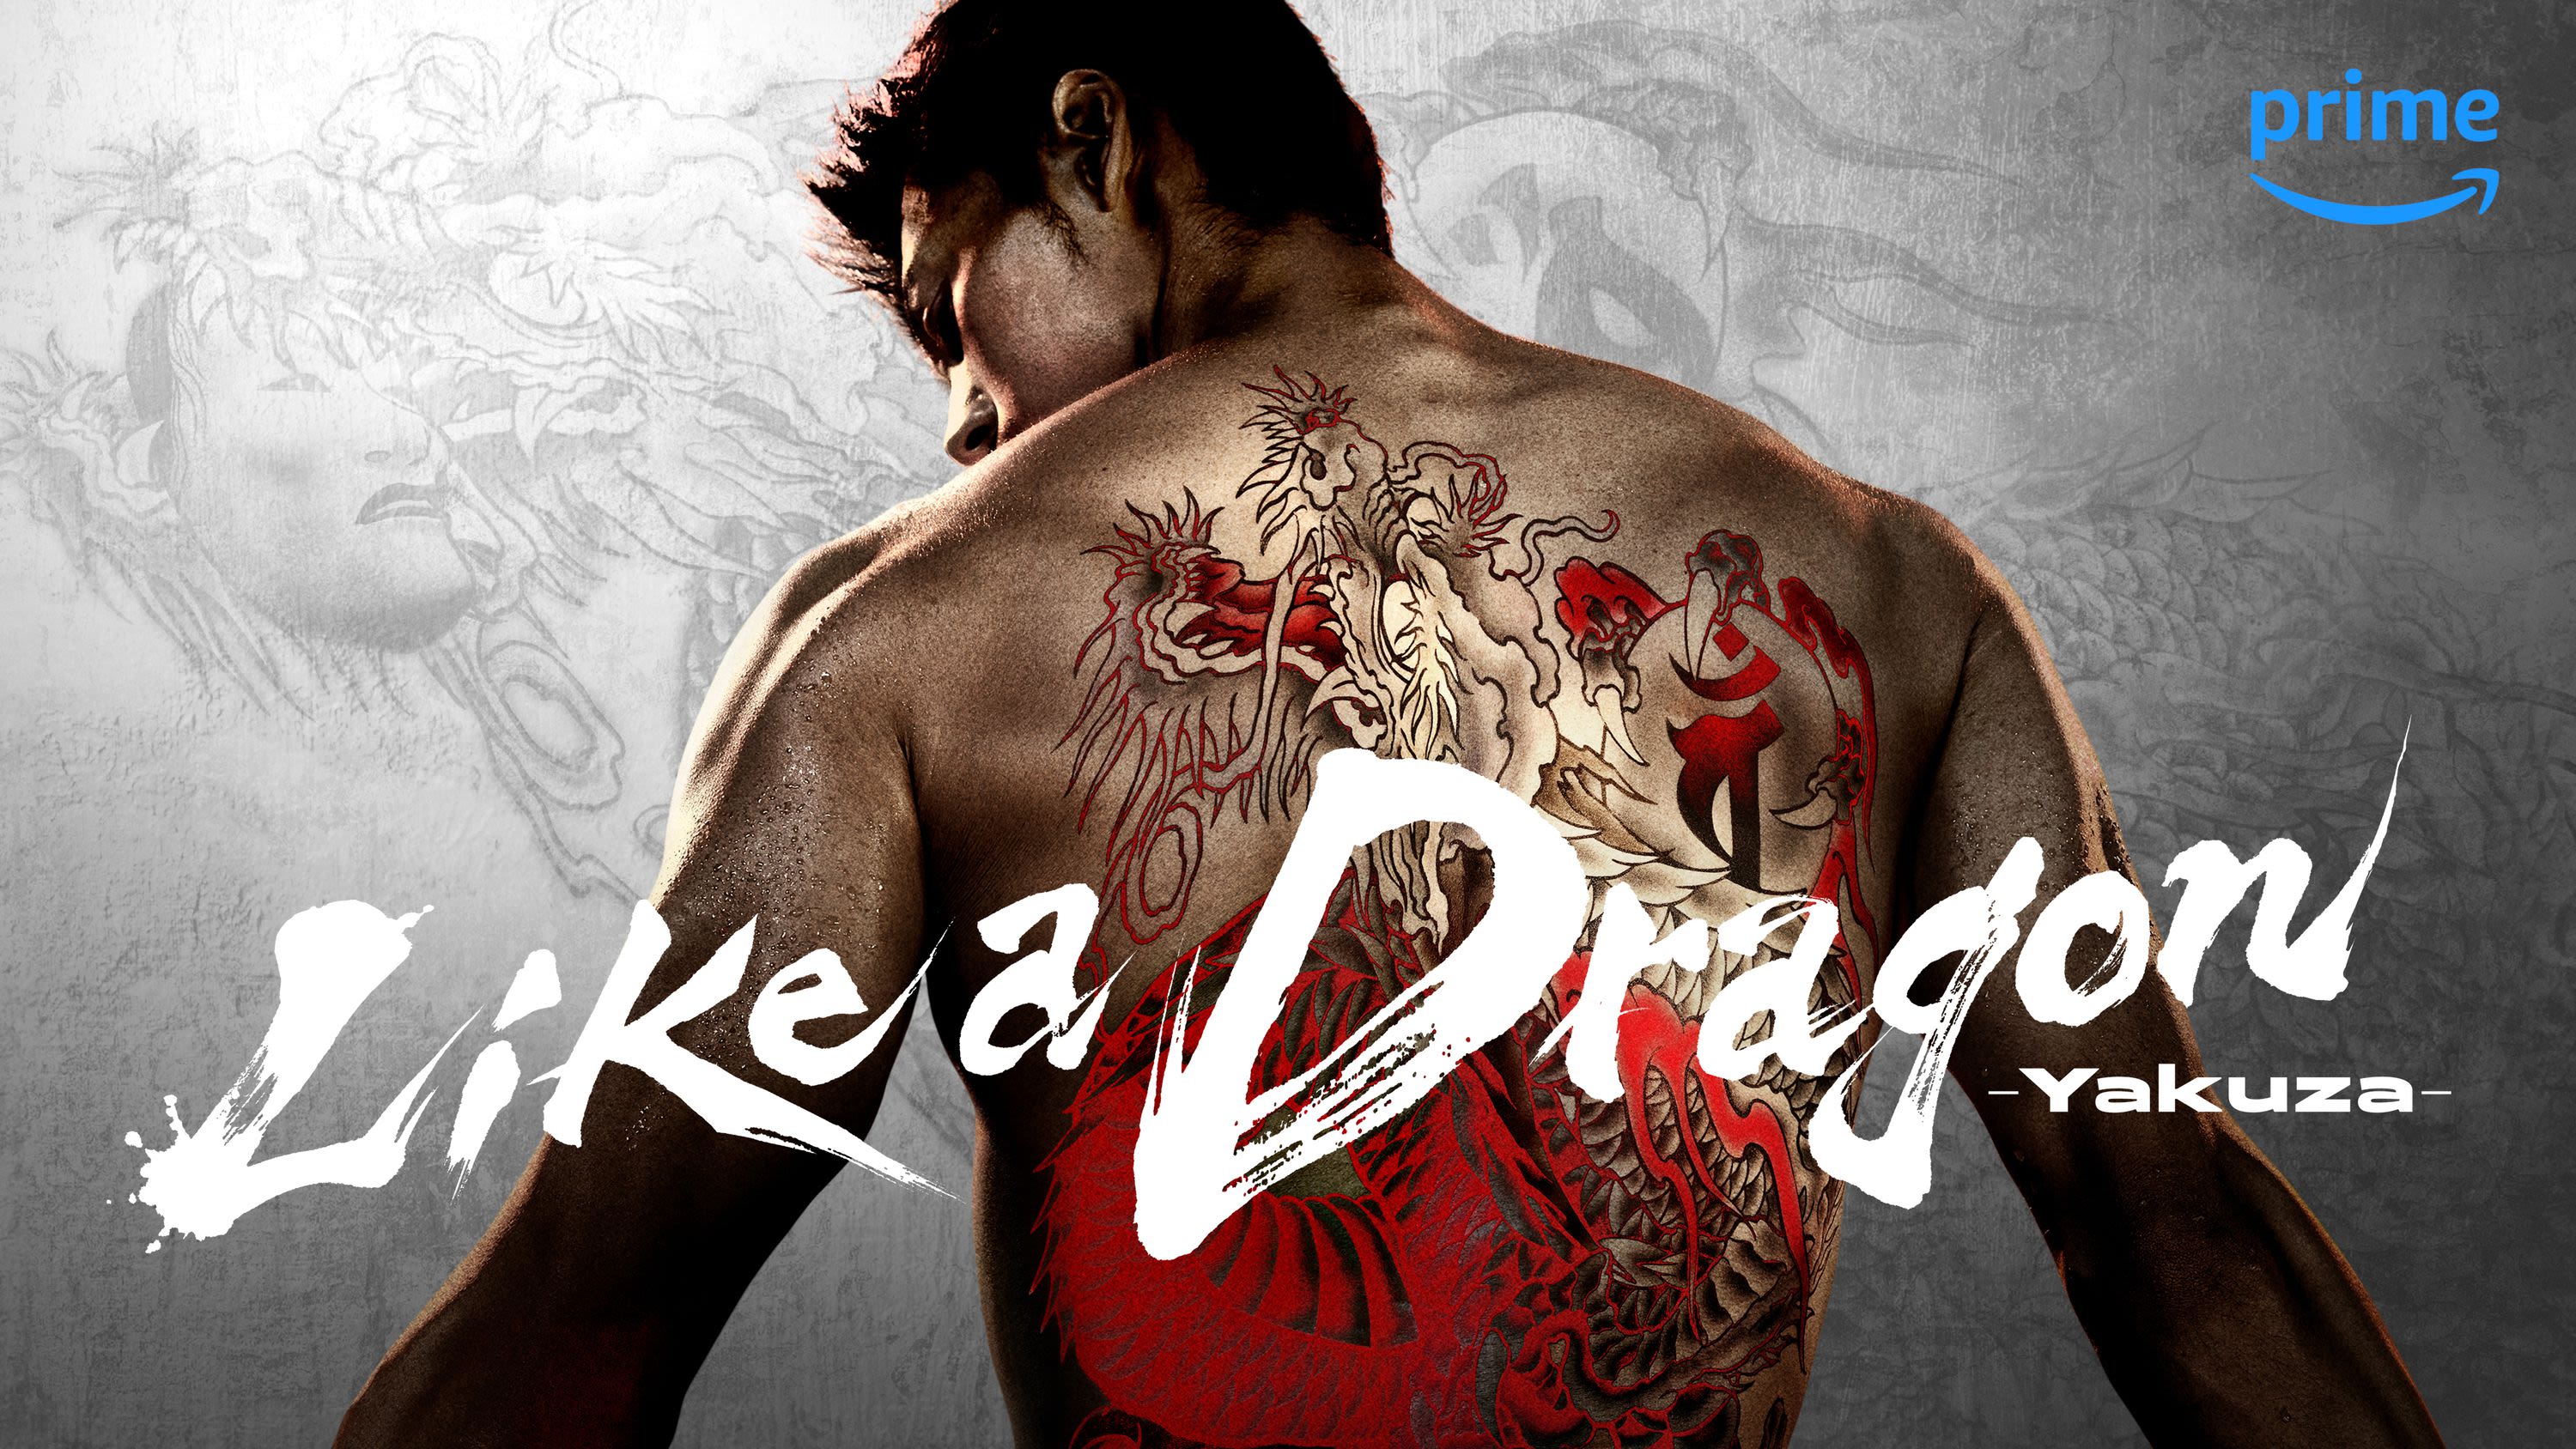 Amazon's live-action TV adaptation of Yakuza: Like a Dragon starts streaming in October.